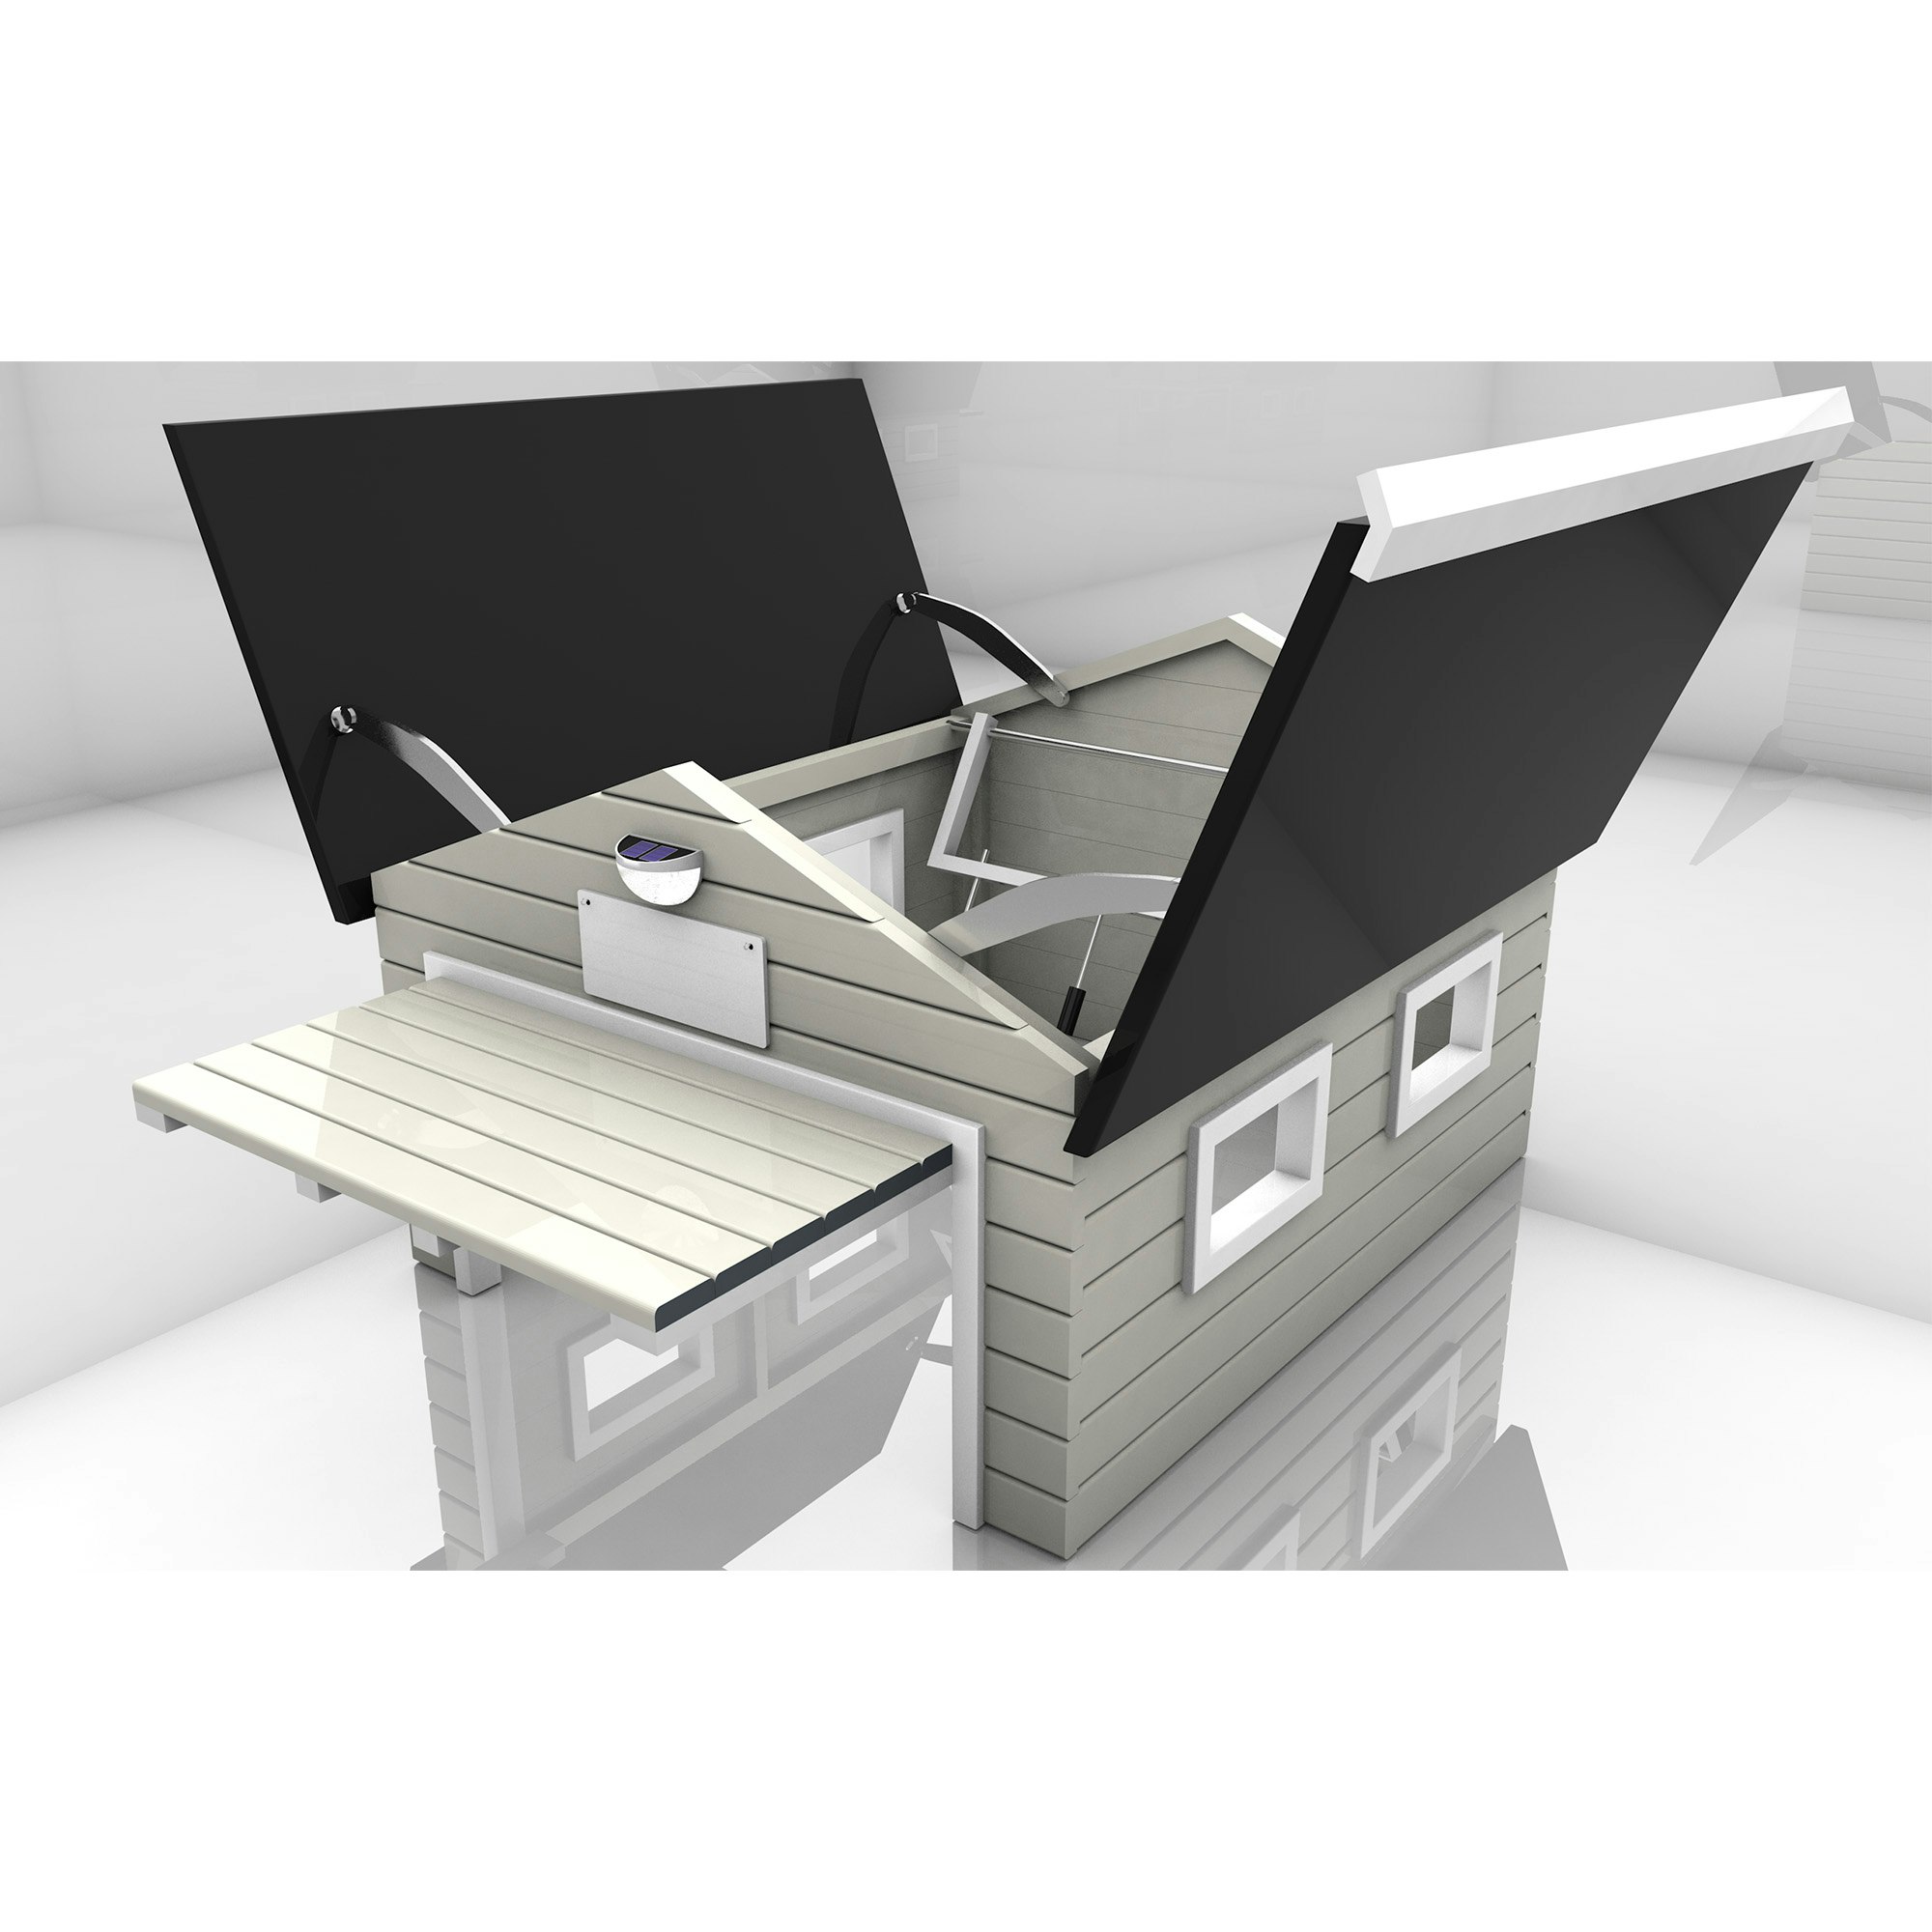 My Robot Home Plus – White & Grey5290